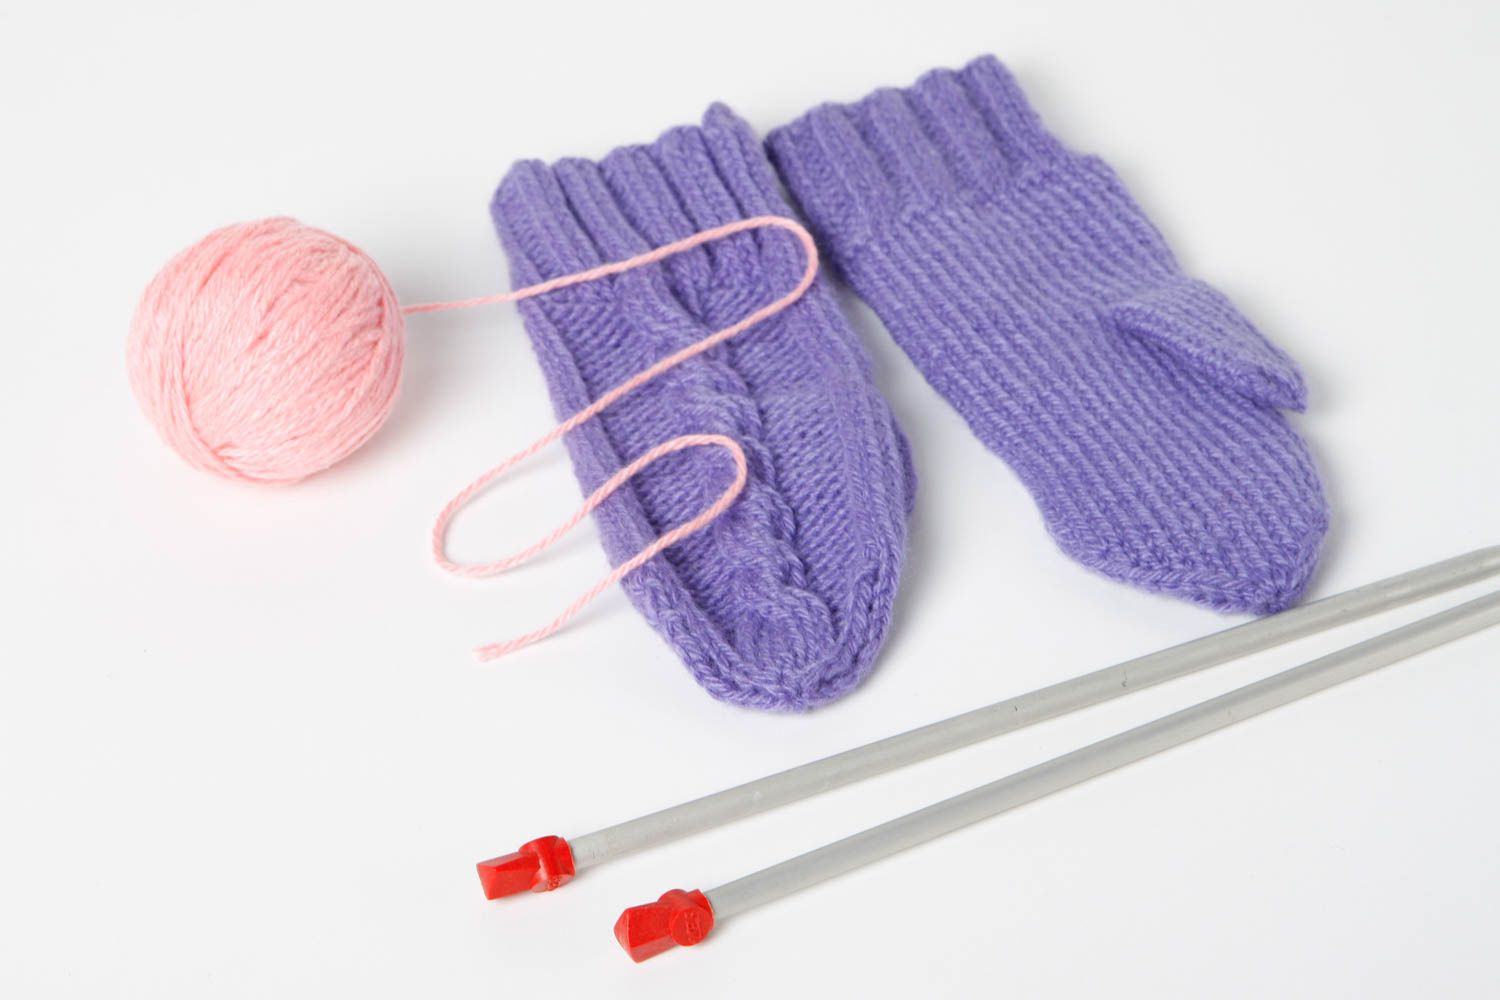 Handmade knitted mittens winter mittens winter accessories hand-knitted mittens photo 1